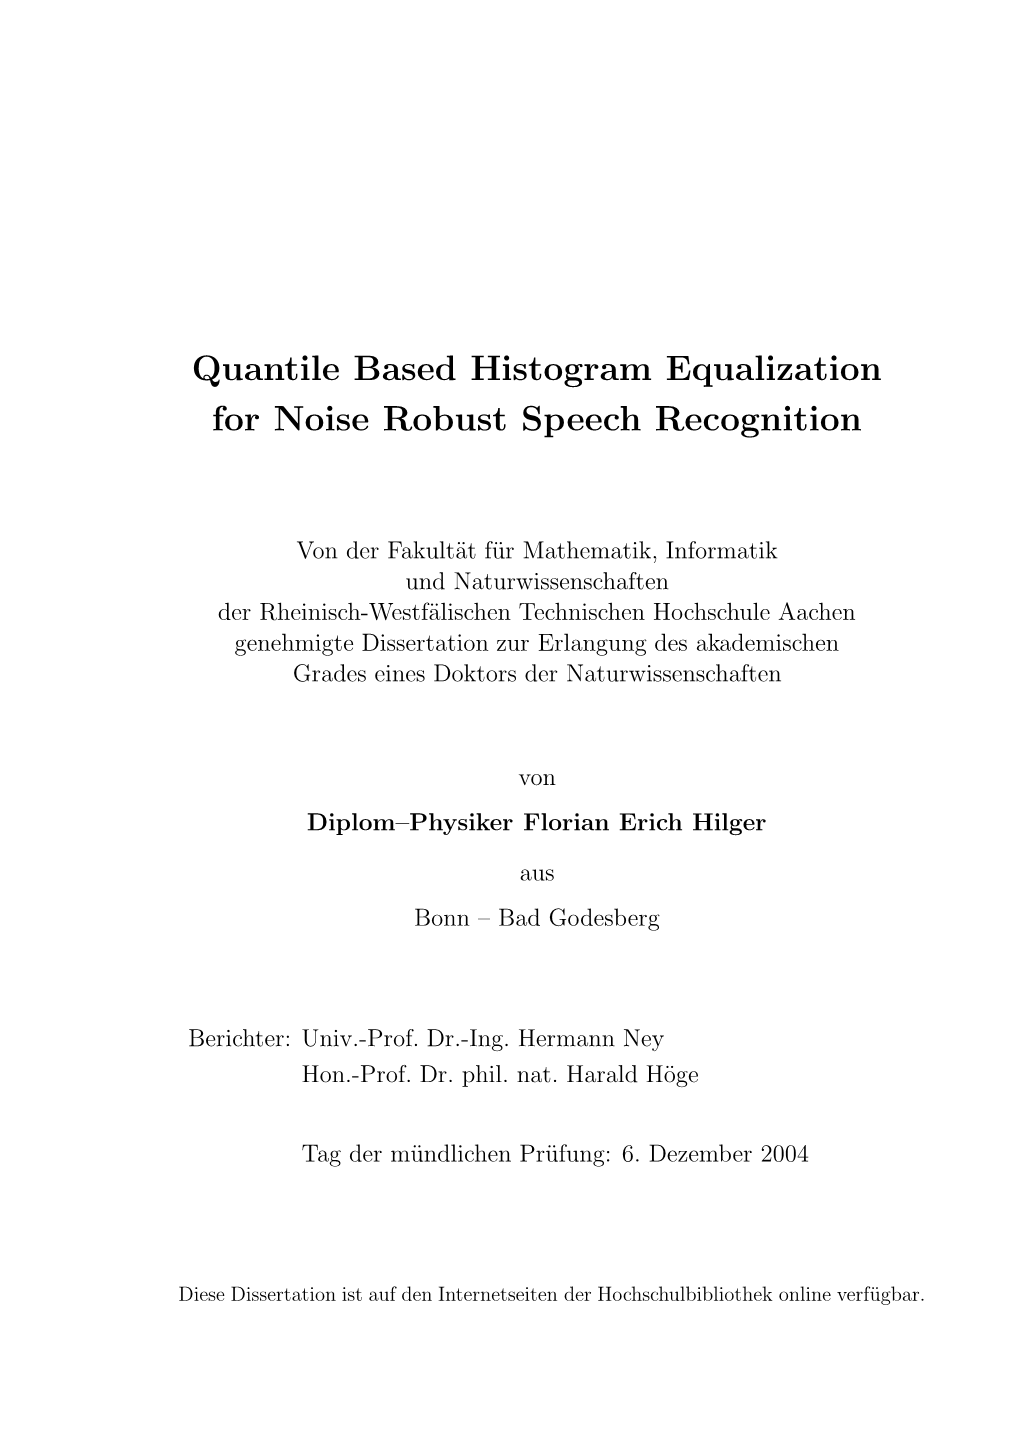 Quantile Based Histogram Equalization for Noise Robust Speech Recognition